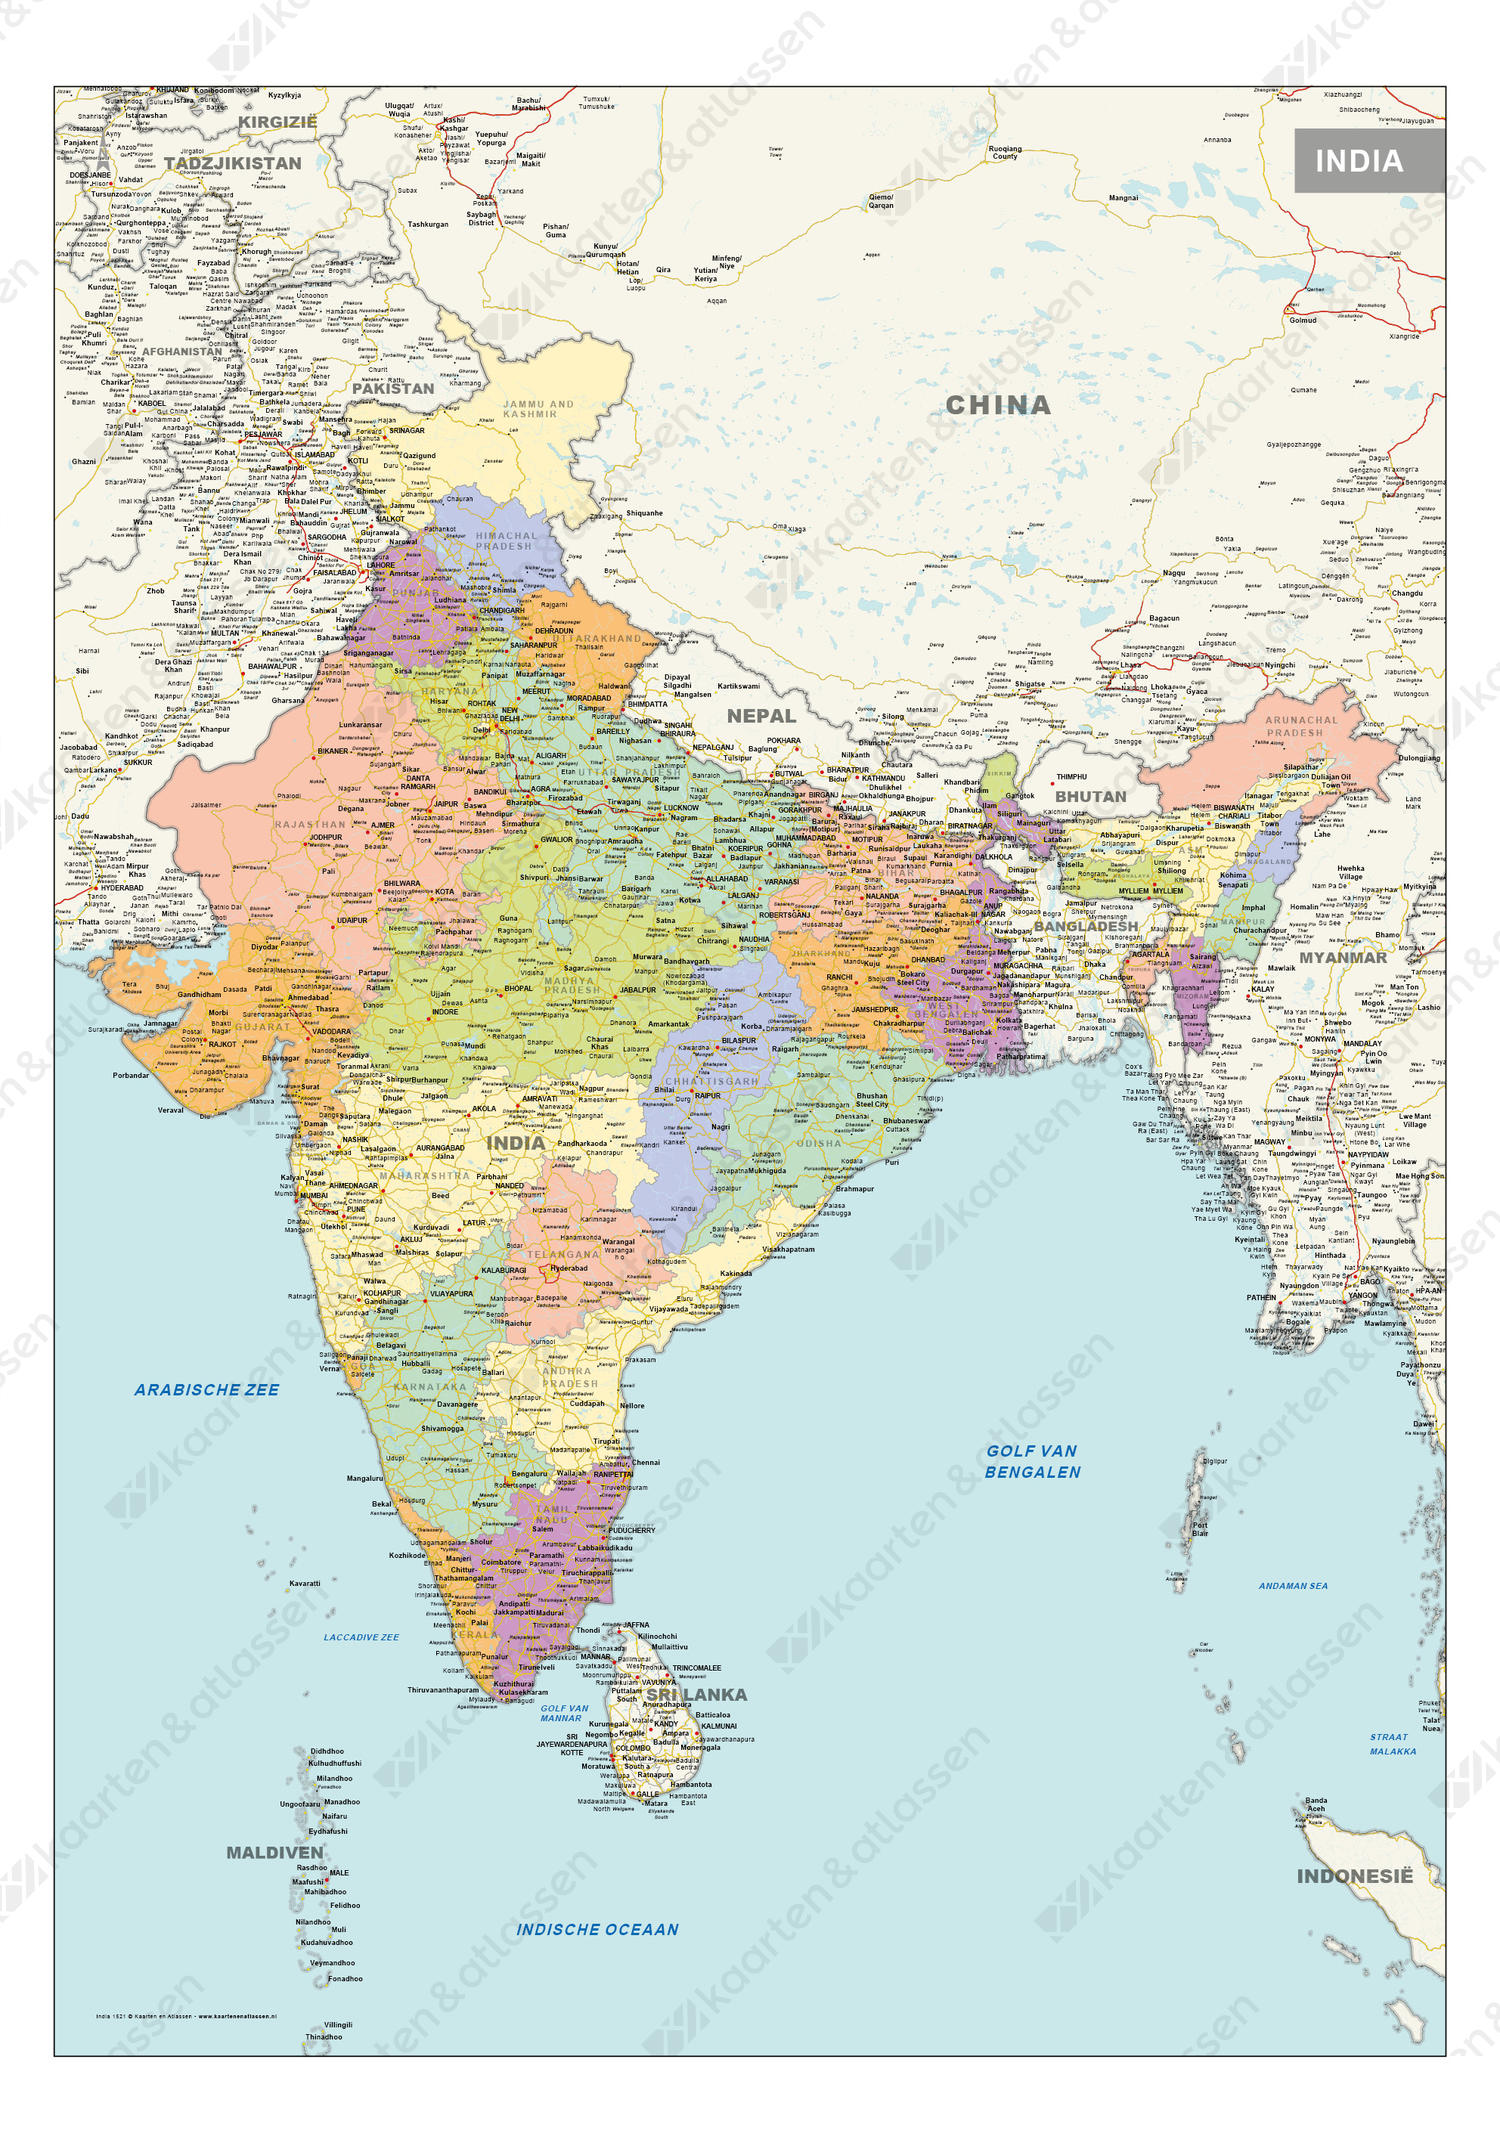 staatkundige kaart India